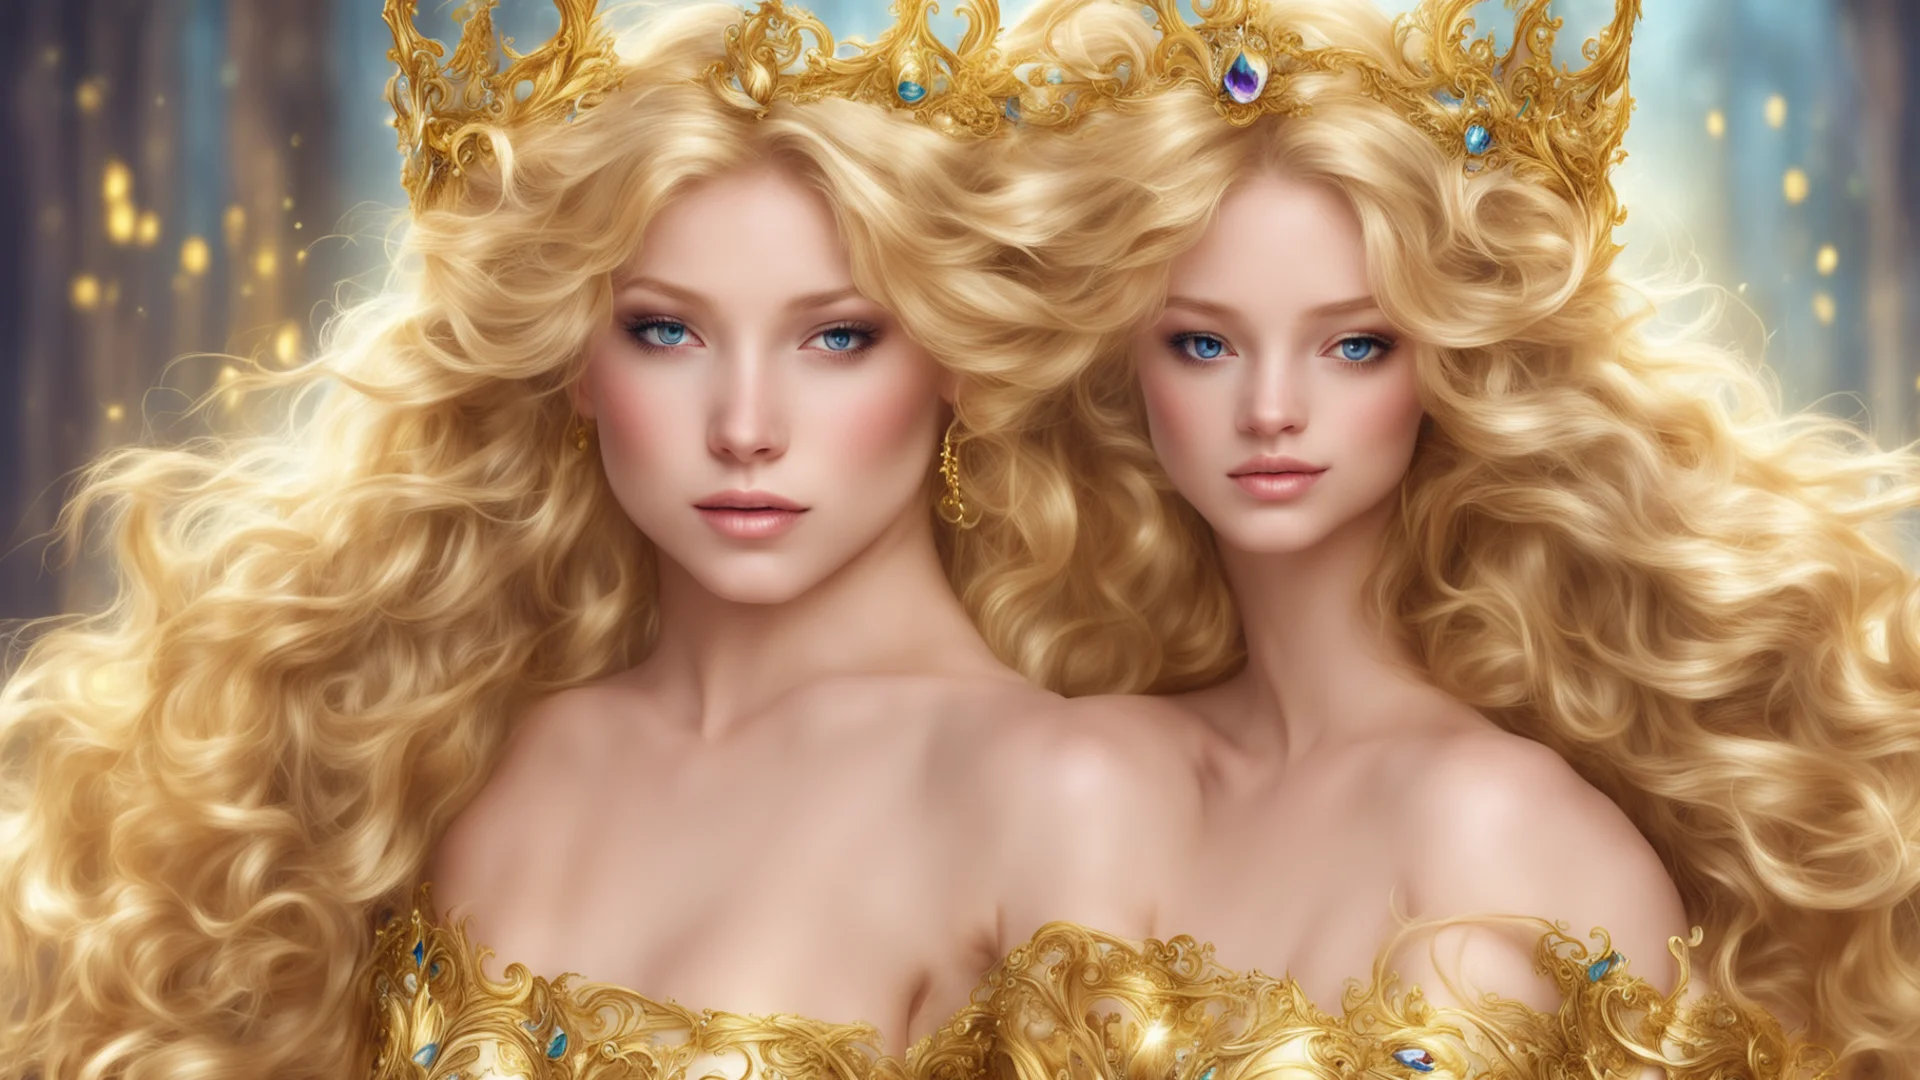 aiprincess golden blonde fantasy art good looking trending fantastic 1 amazing awesome portrait 2 wide